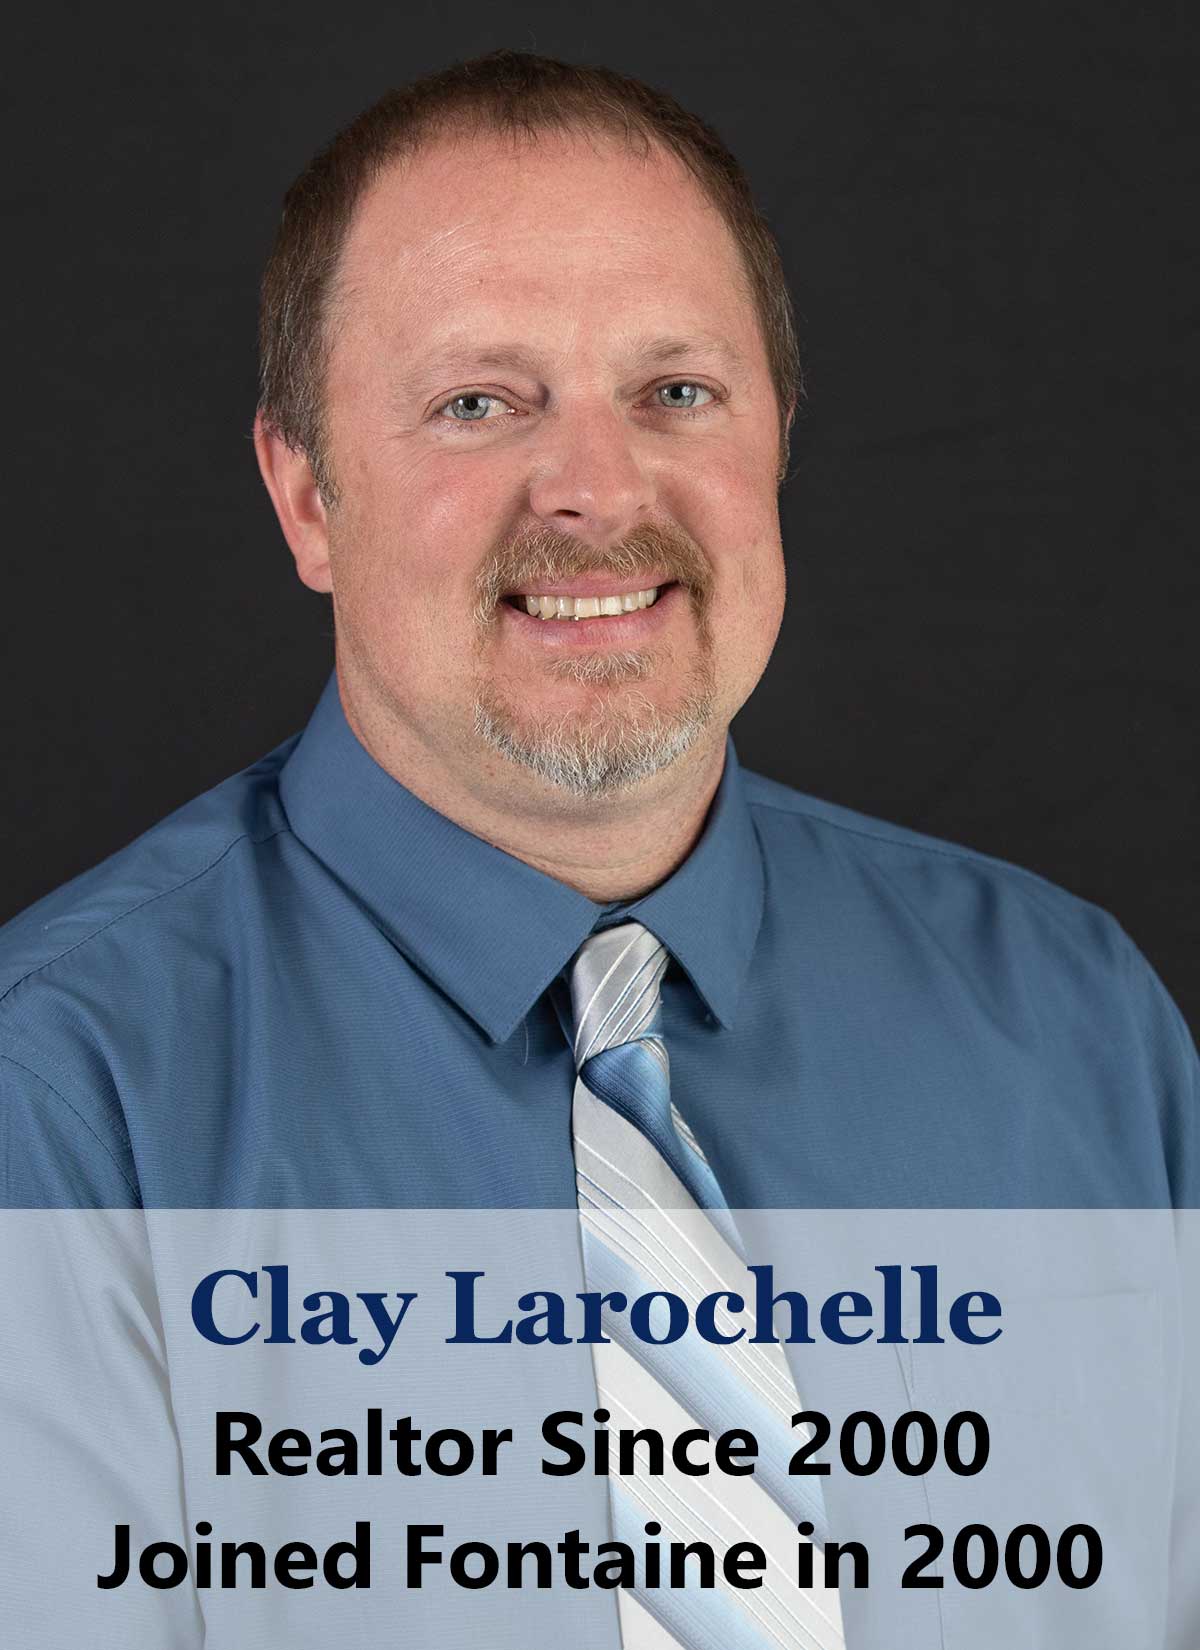 Clay Larochelle